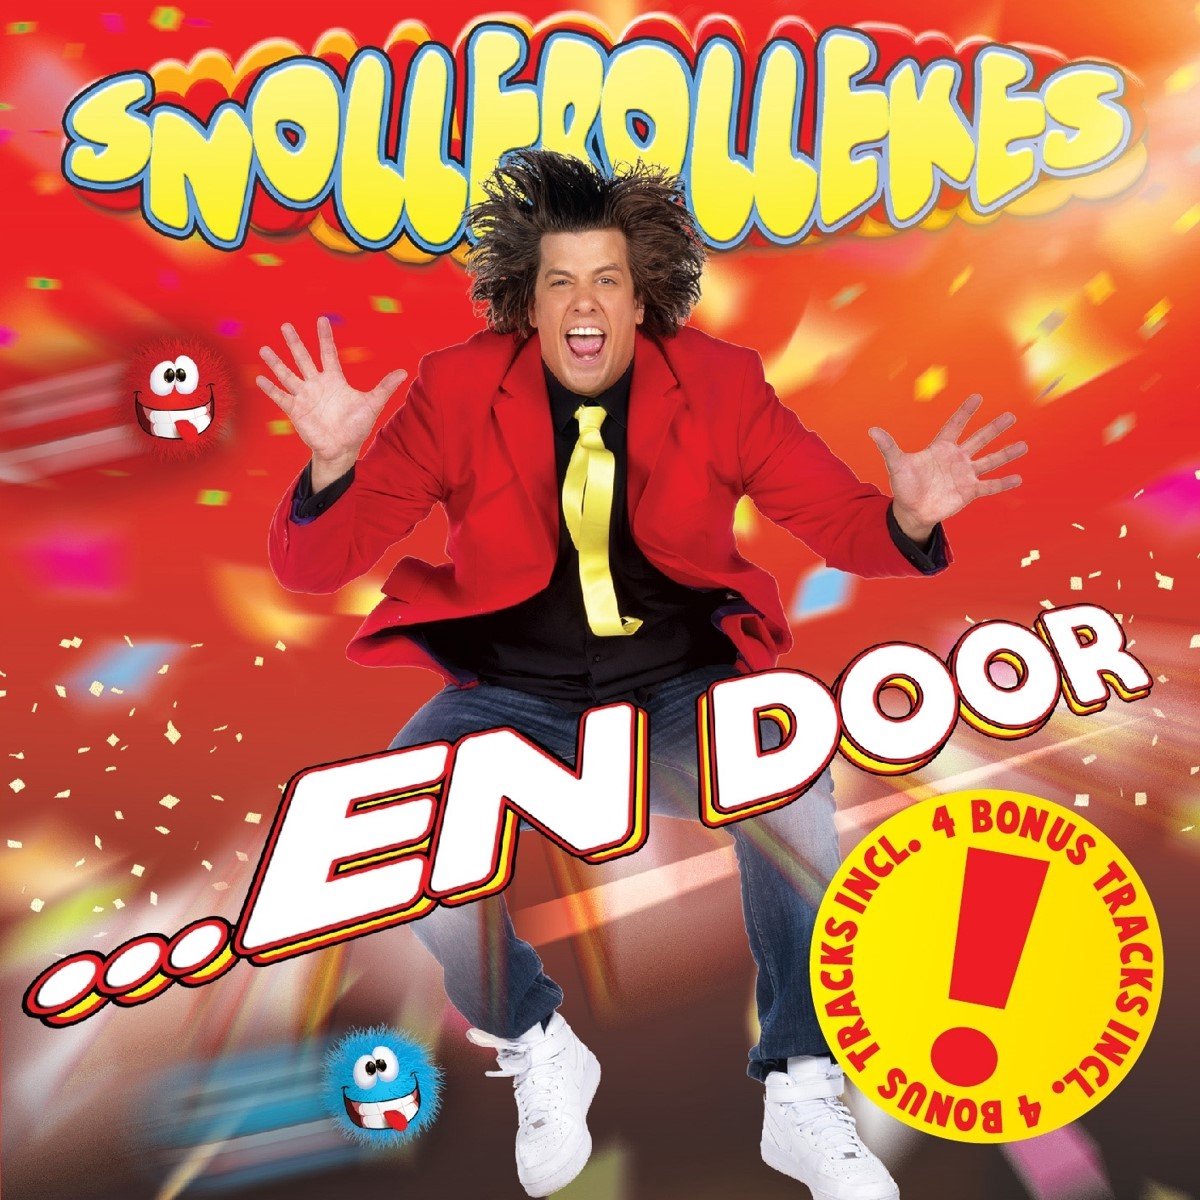 Snollebollekes - ...En Door (CD) (Bonus Edition) - Snollebollekes